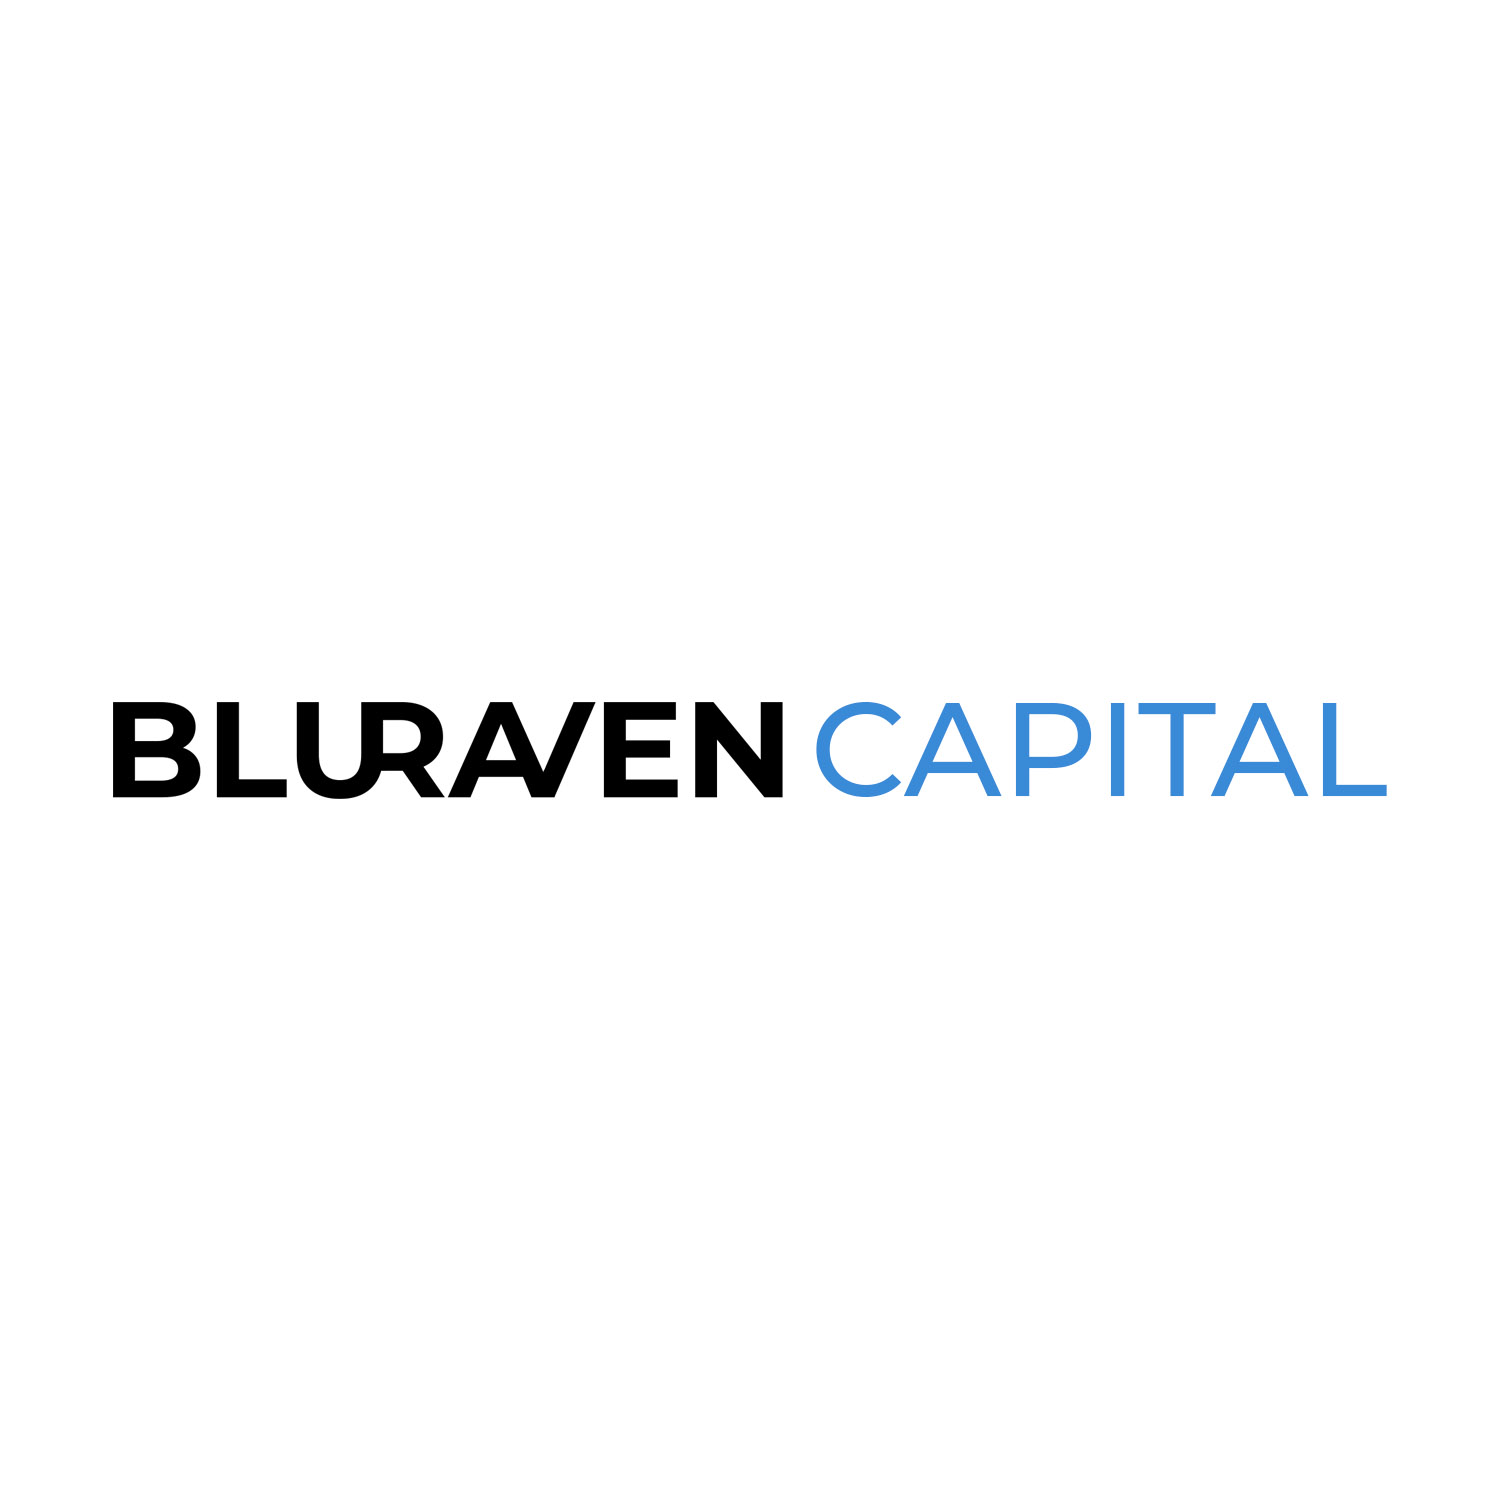 Bluraven Capital